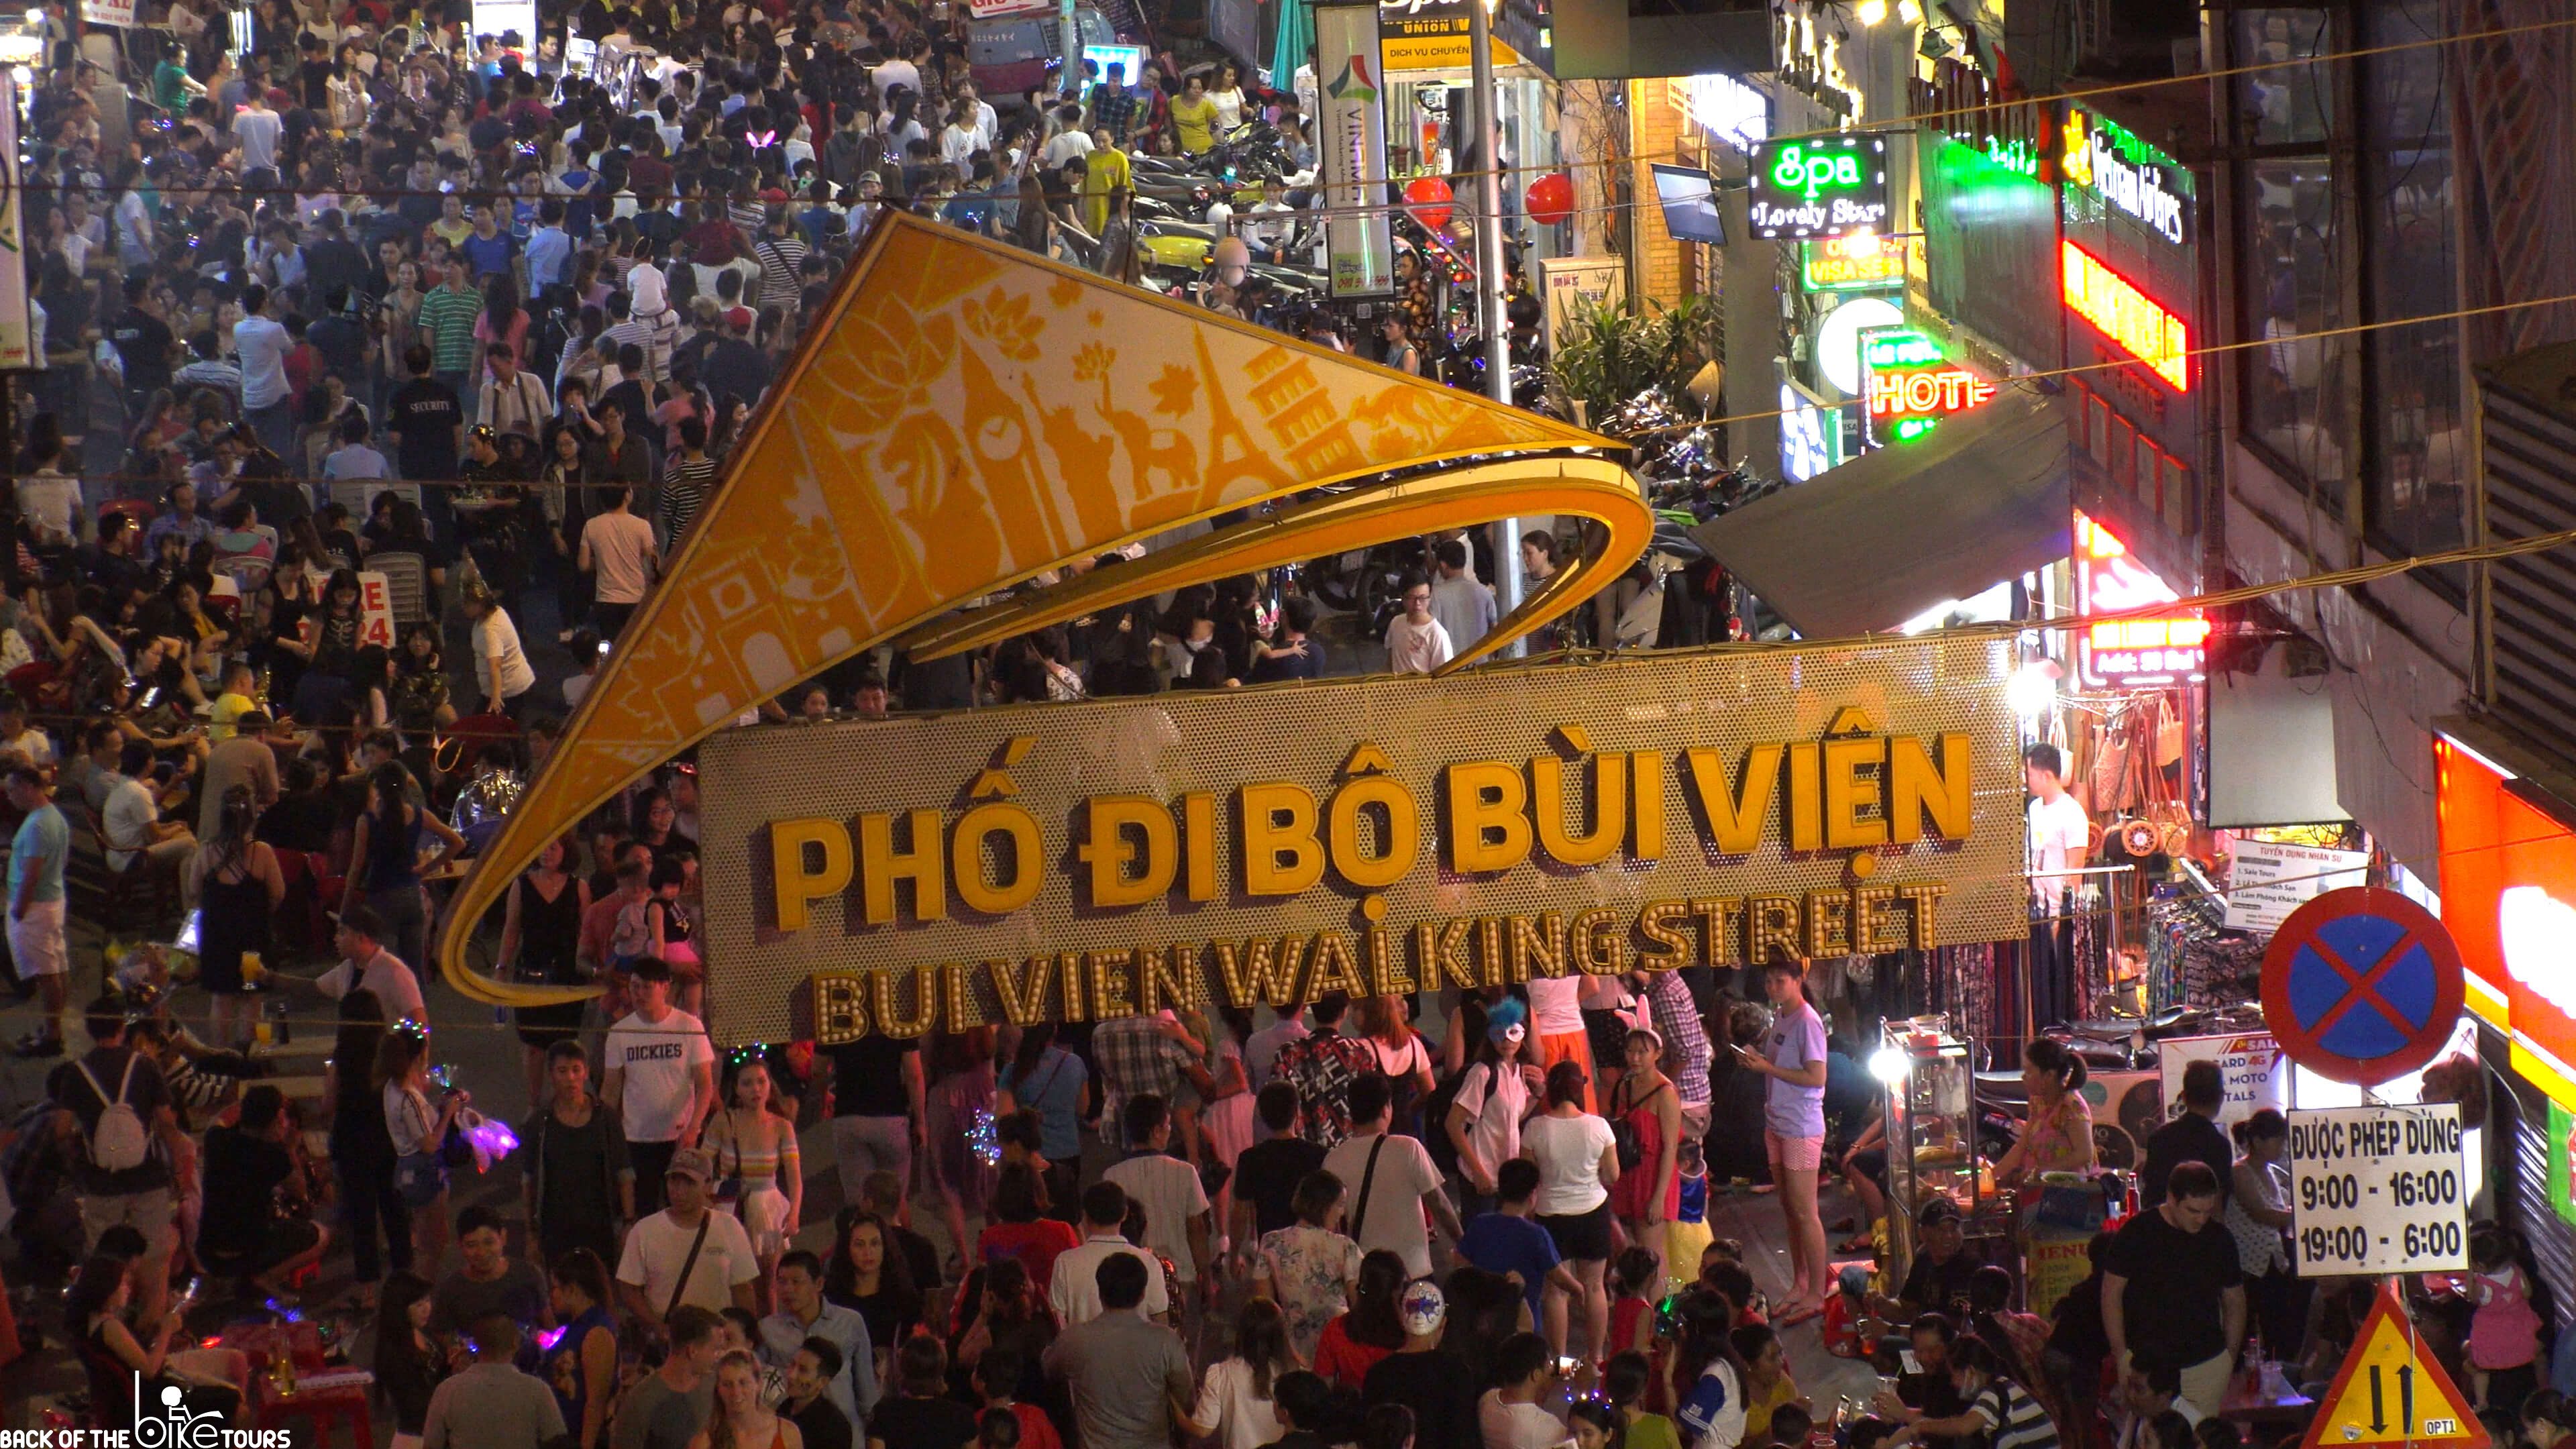 Bui Vien street has a ton of bars